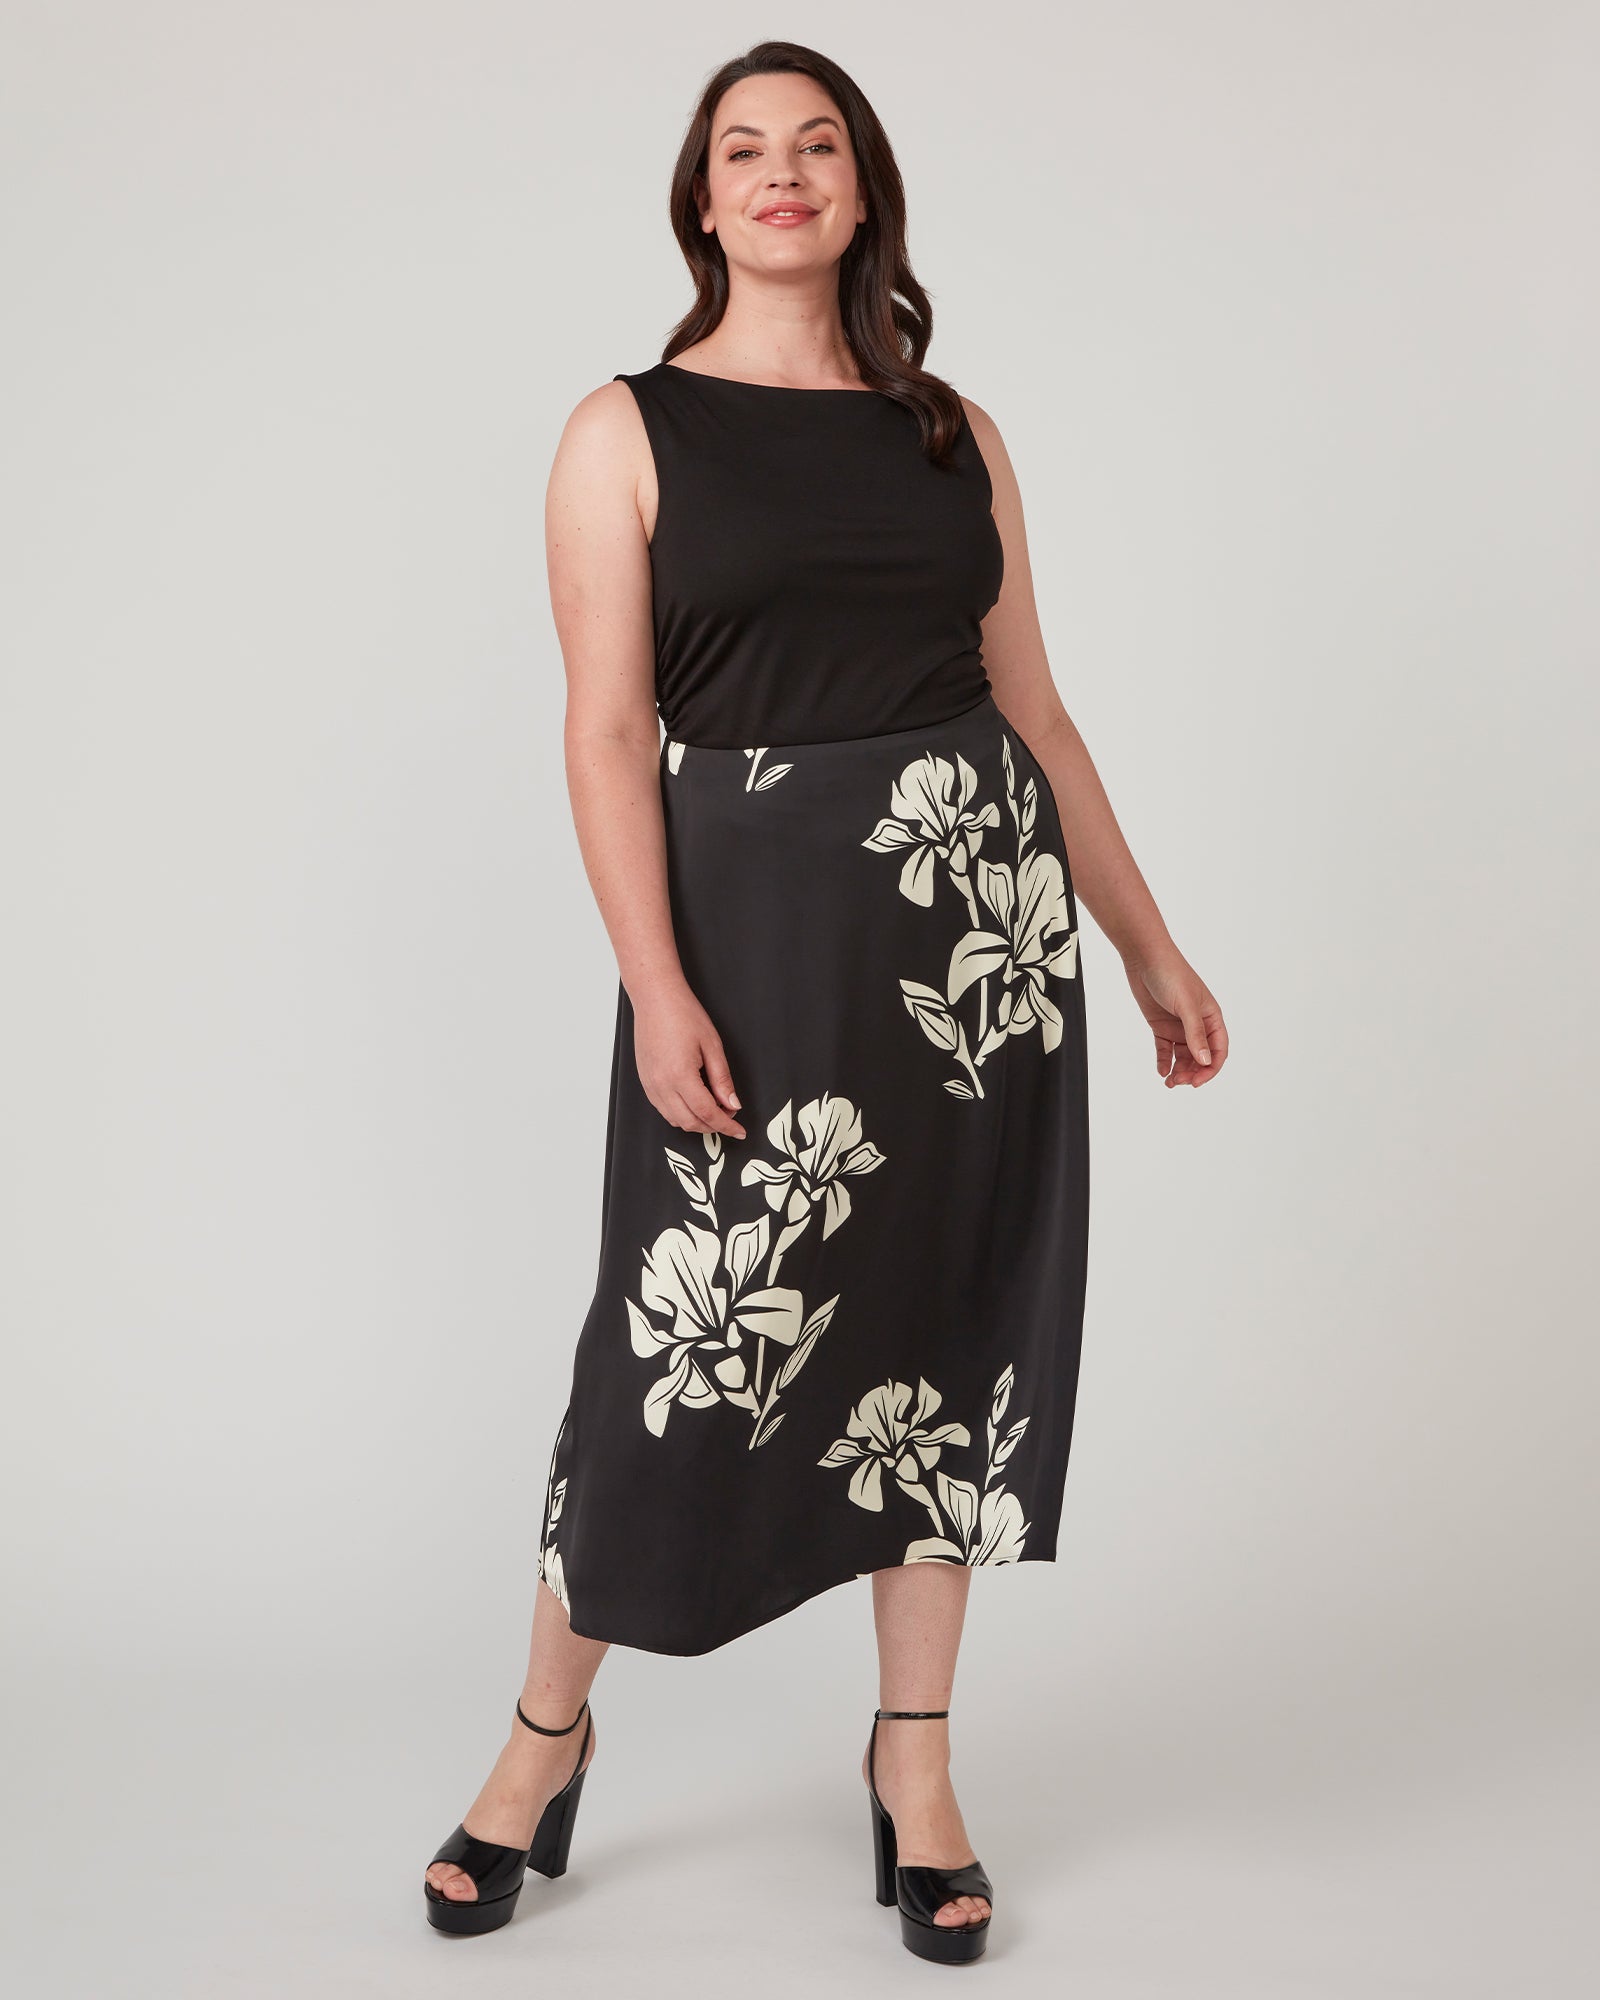 Morocco Blooms Skirt - Black & Cream - Estelle Clothing